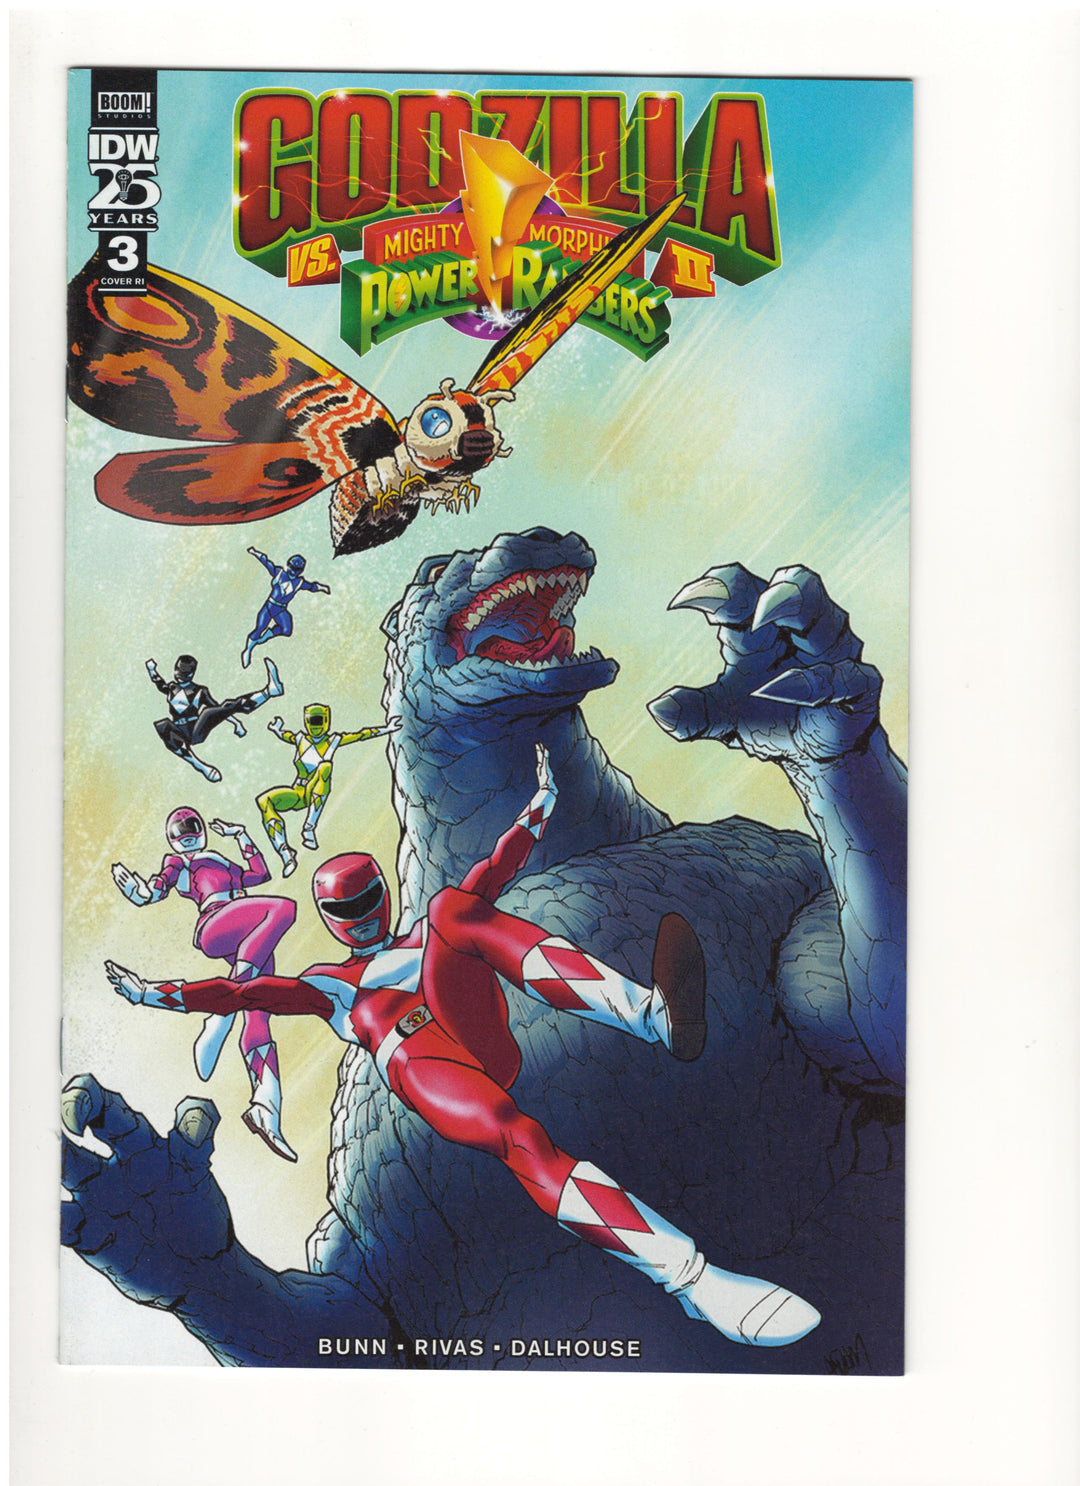 Godzilla vs The Mighty Morphin Power Rangers II #3 (1:10) Gorham Variant